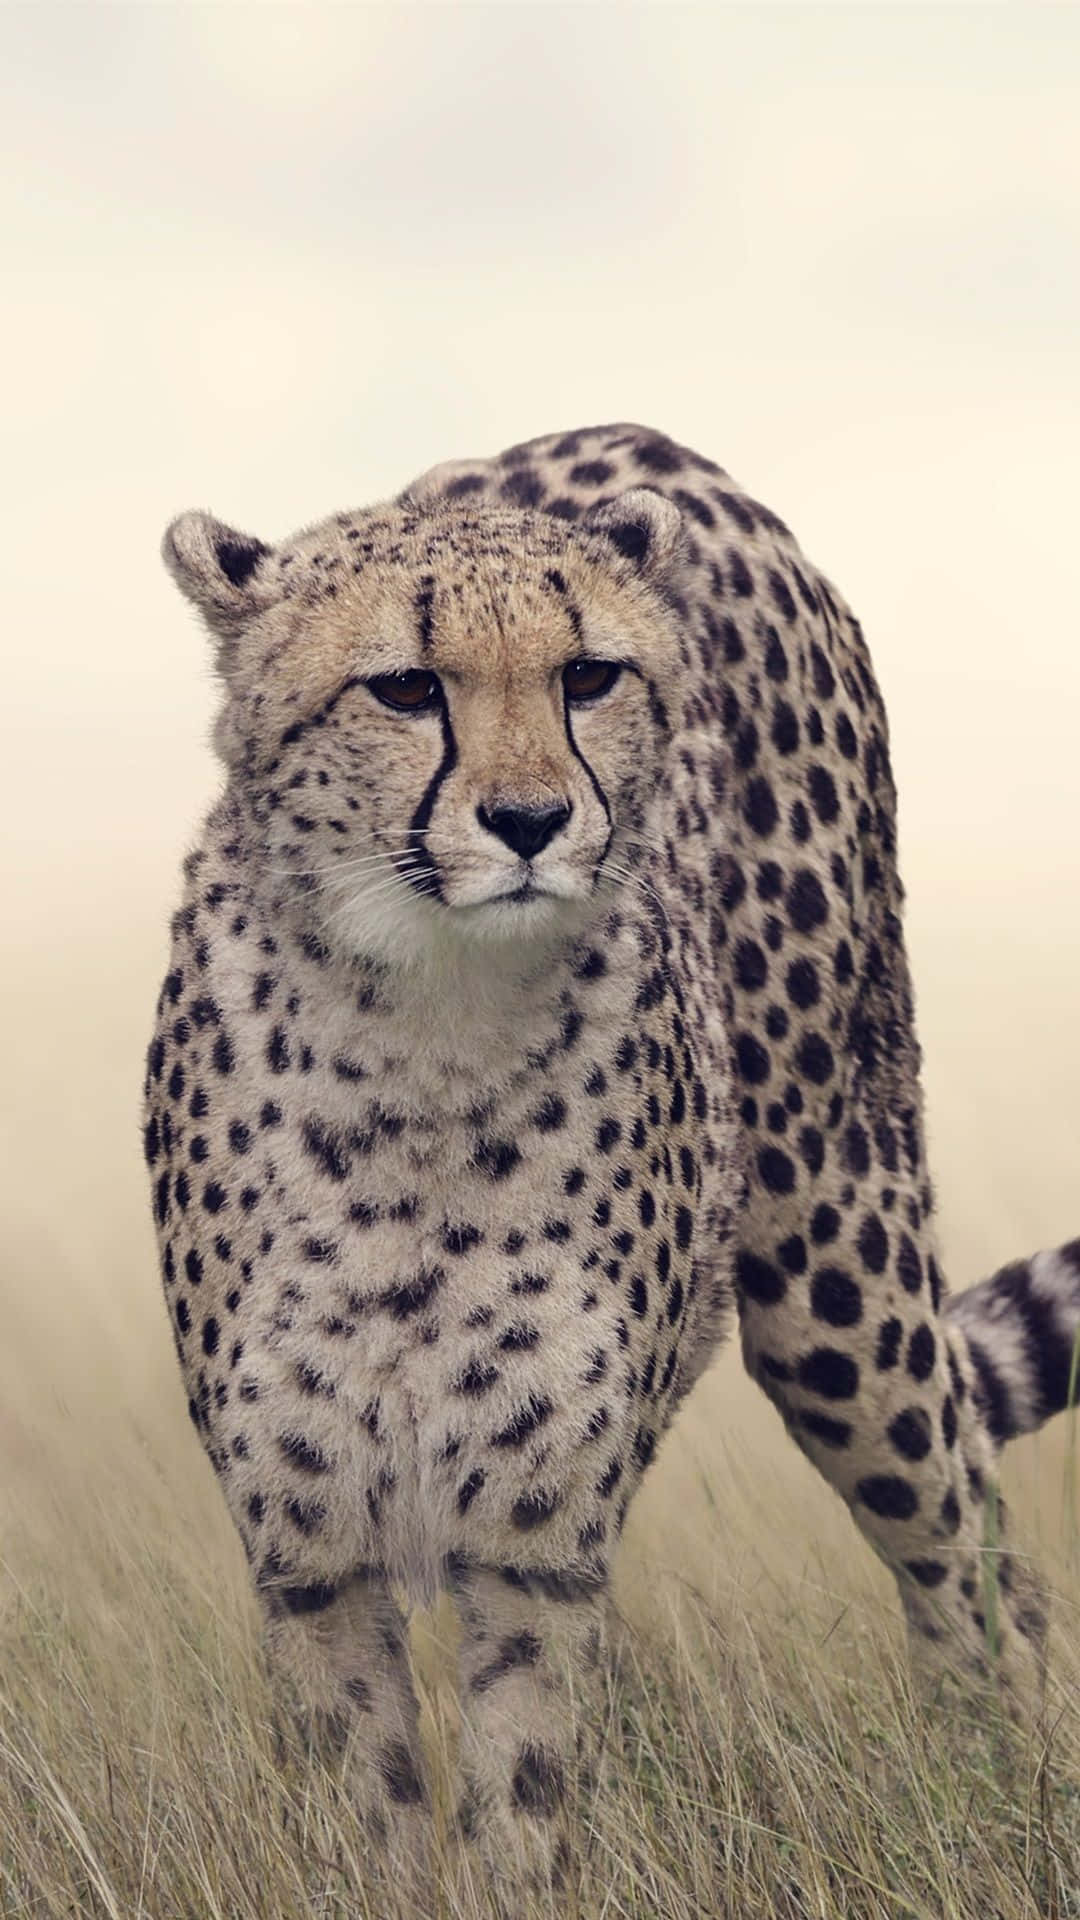 Enjoy the sleek, chic look of the new Cheetah Iphone. Wallpaper